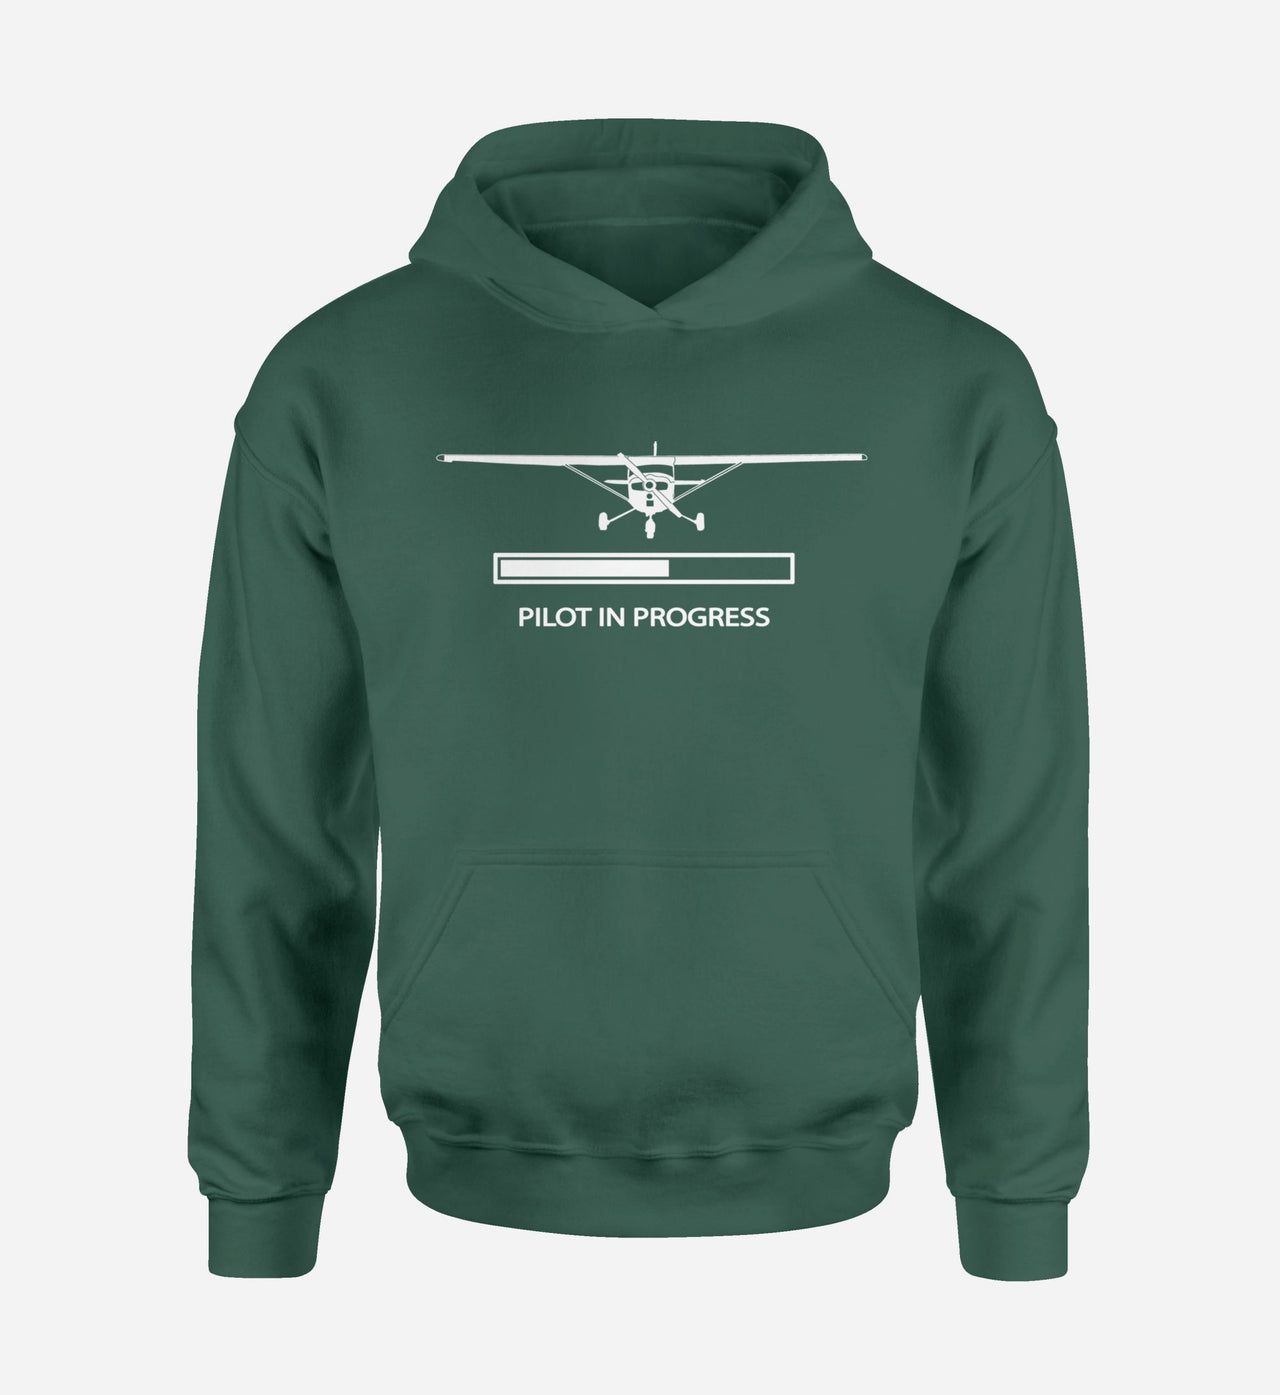 Pilot In Progress (Cessna) Designed Hoodies